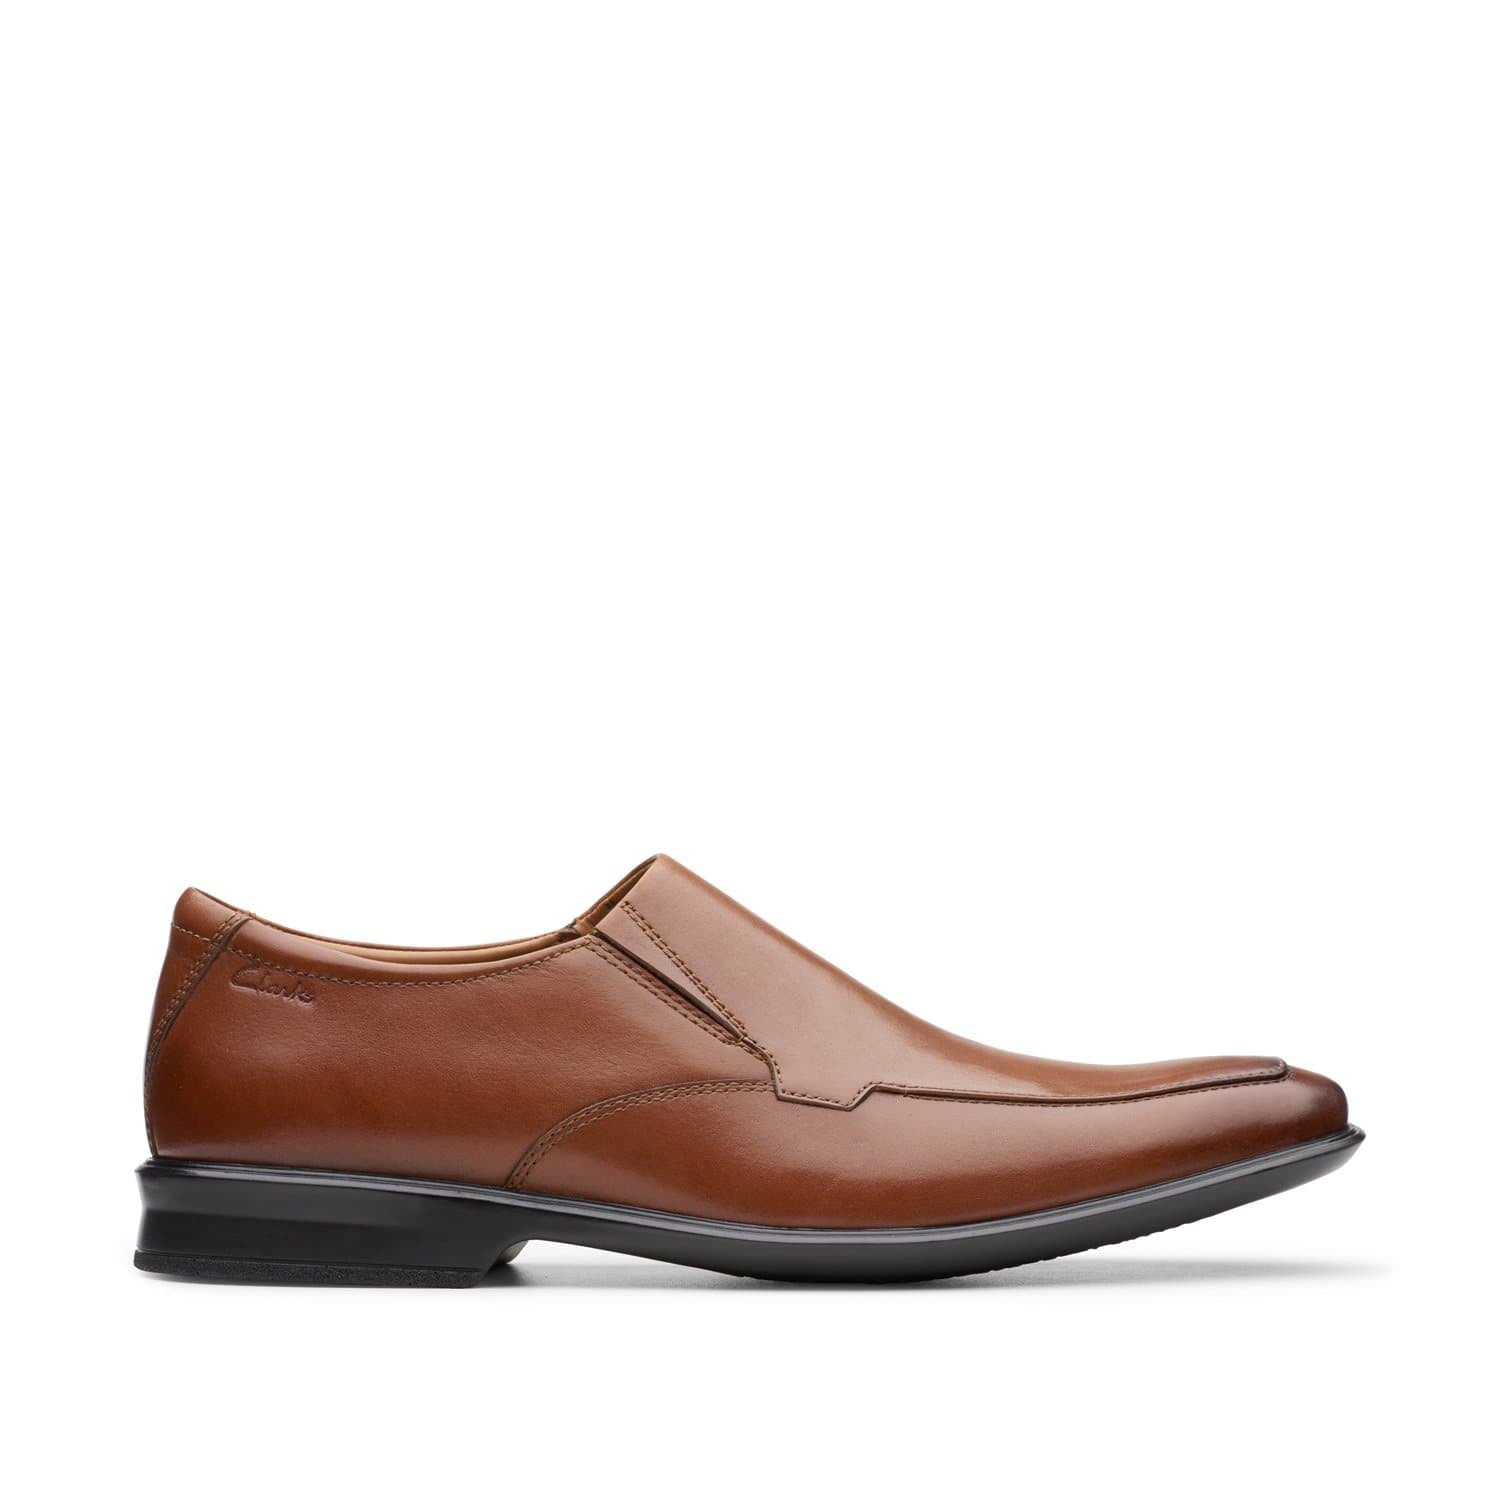 Clarks-Bensley-Step-Men's-Shoes-Dark-Tan-Leather-26147687